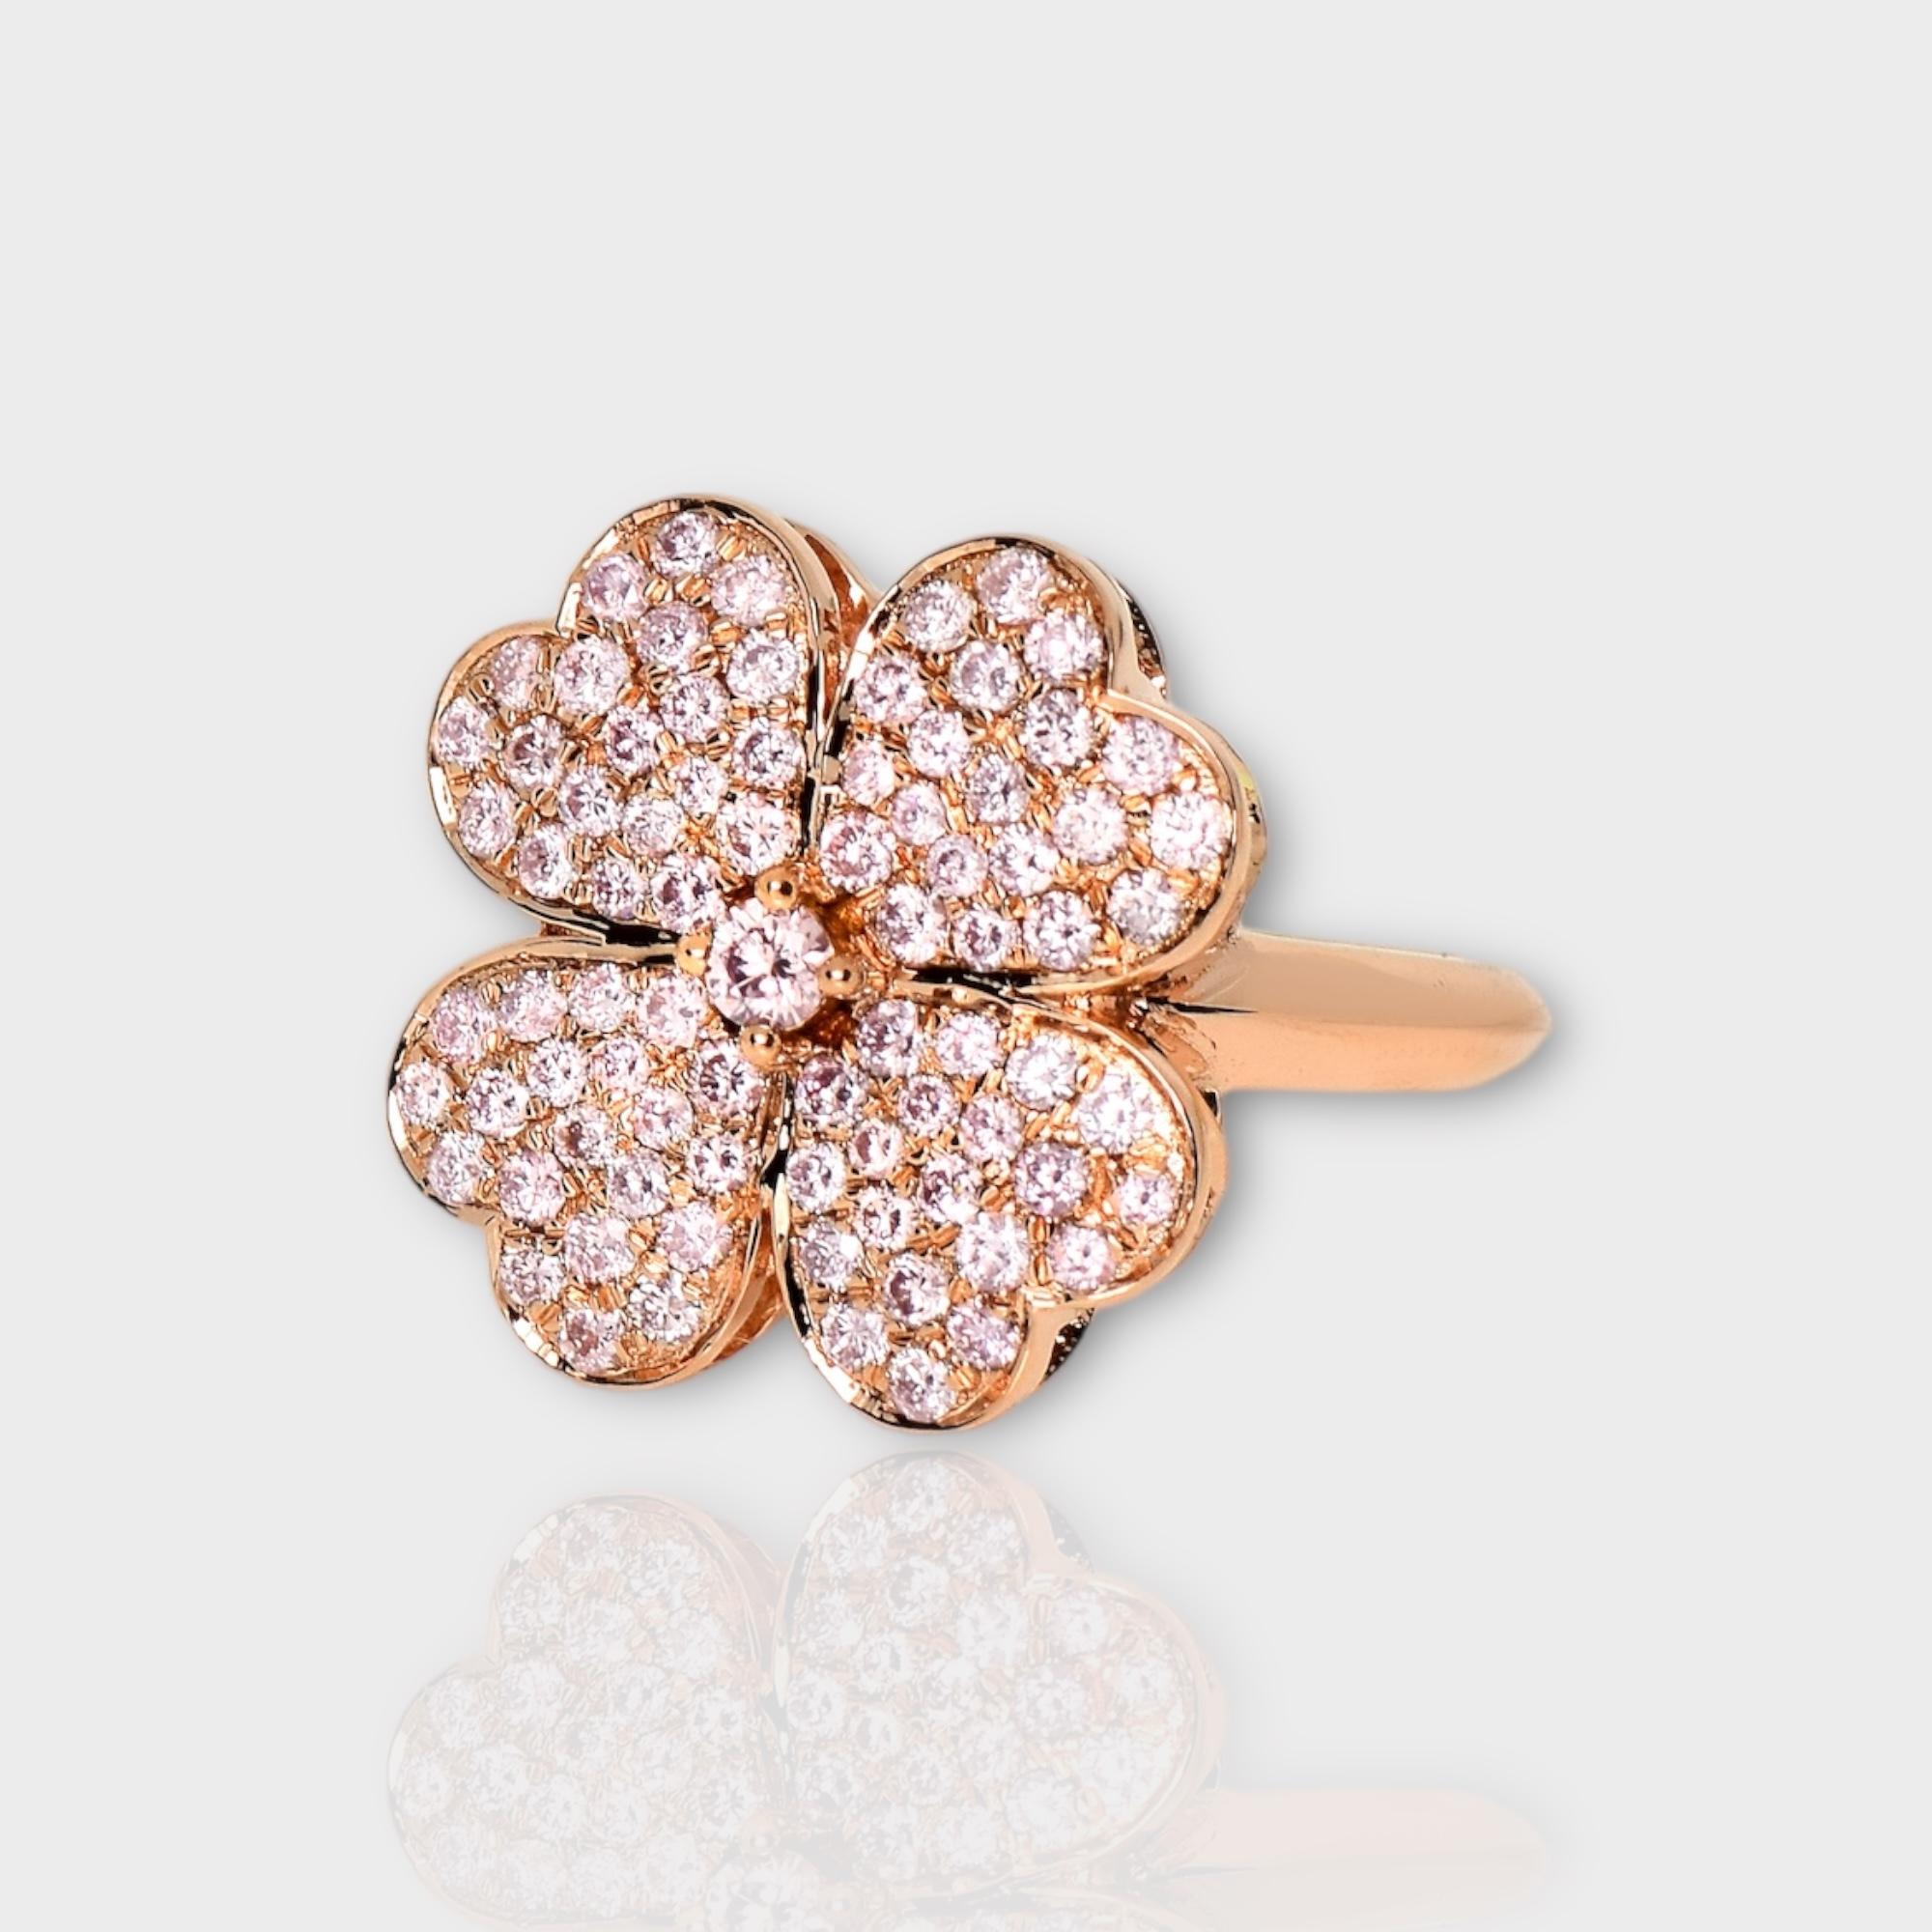 Round Cut IGI 14K 0.98 ct Natural Pink Diamonds Lucky Clover Antique Design Ring For Sale